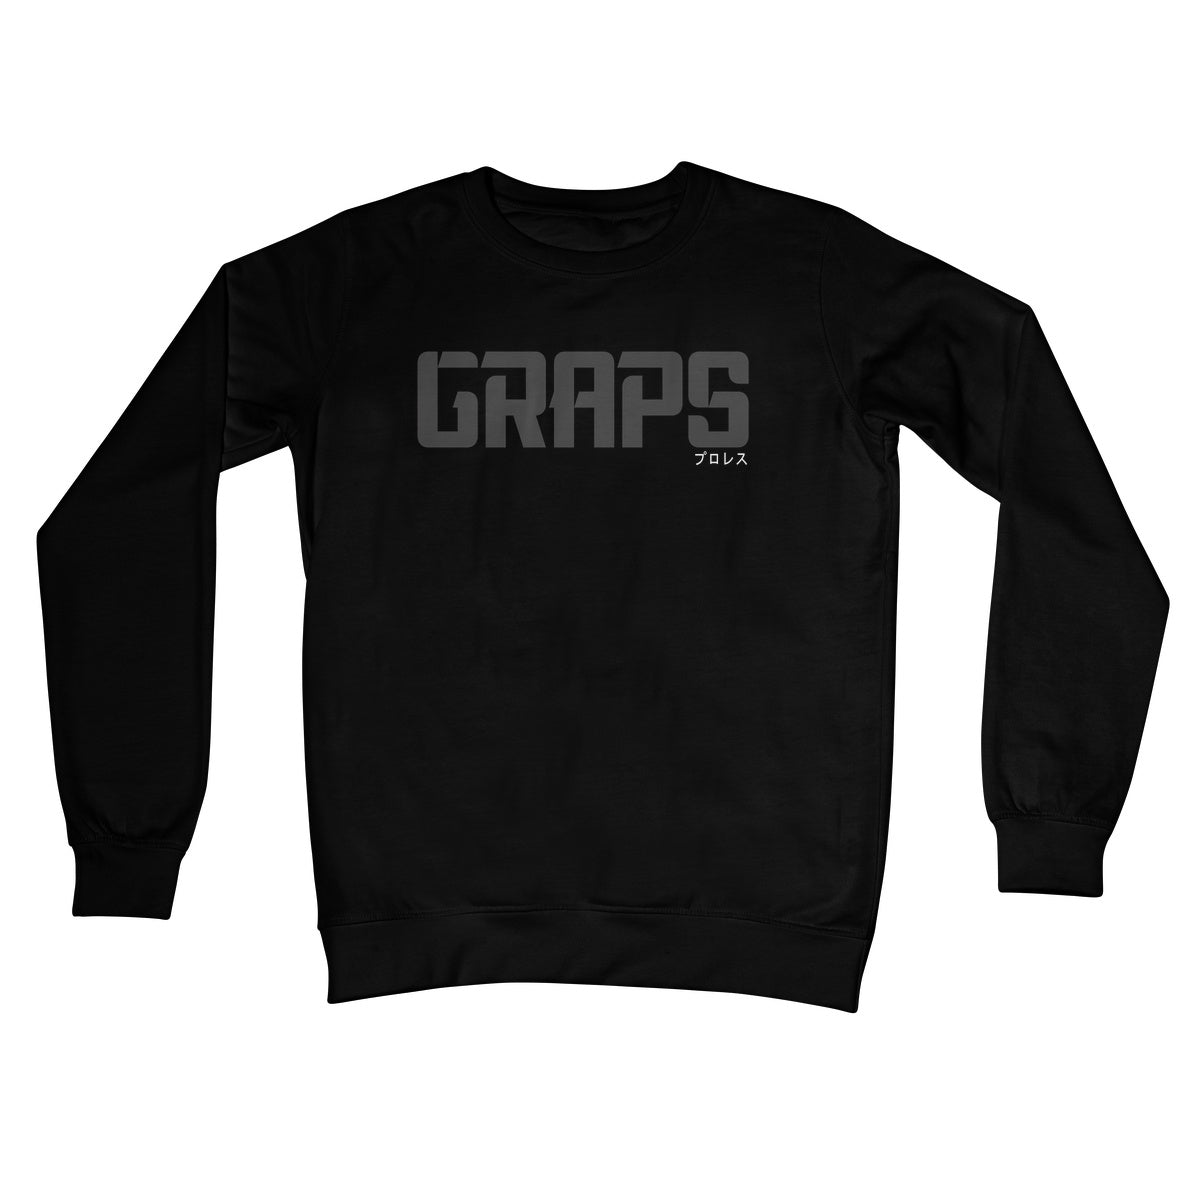 GRAPS - Grey/White Crew Neck Sweatshirt